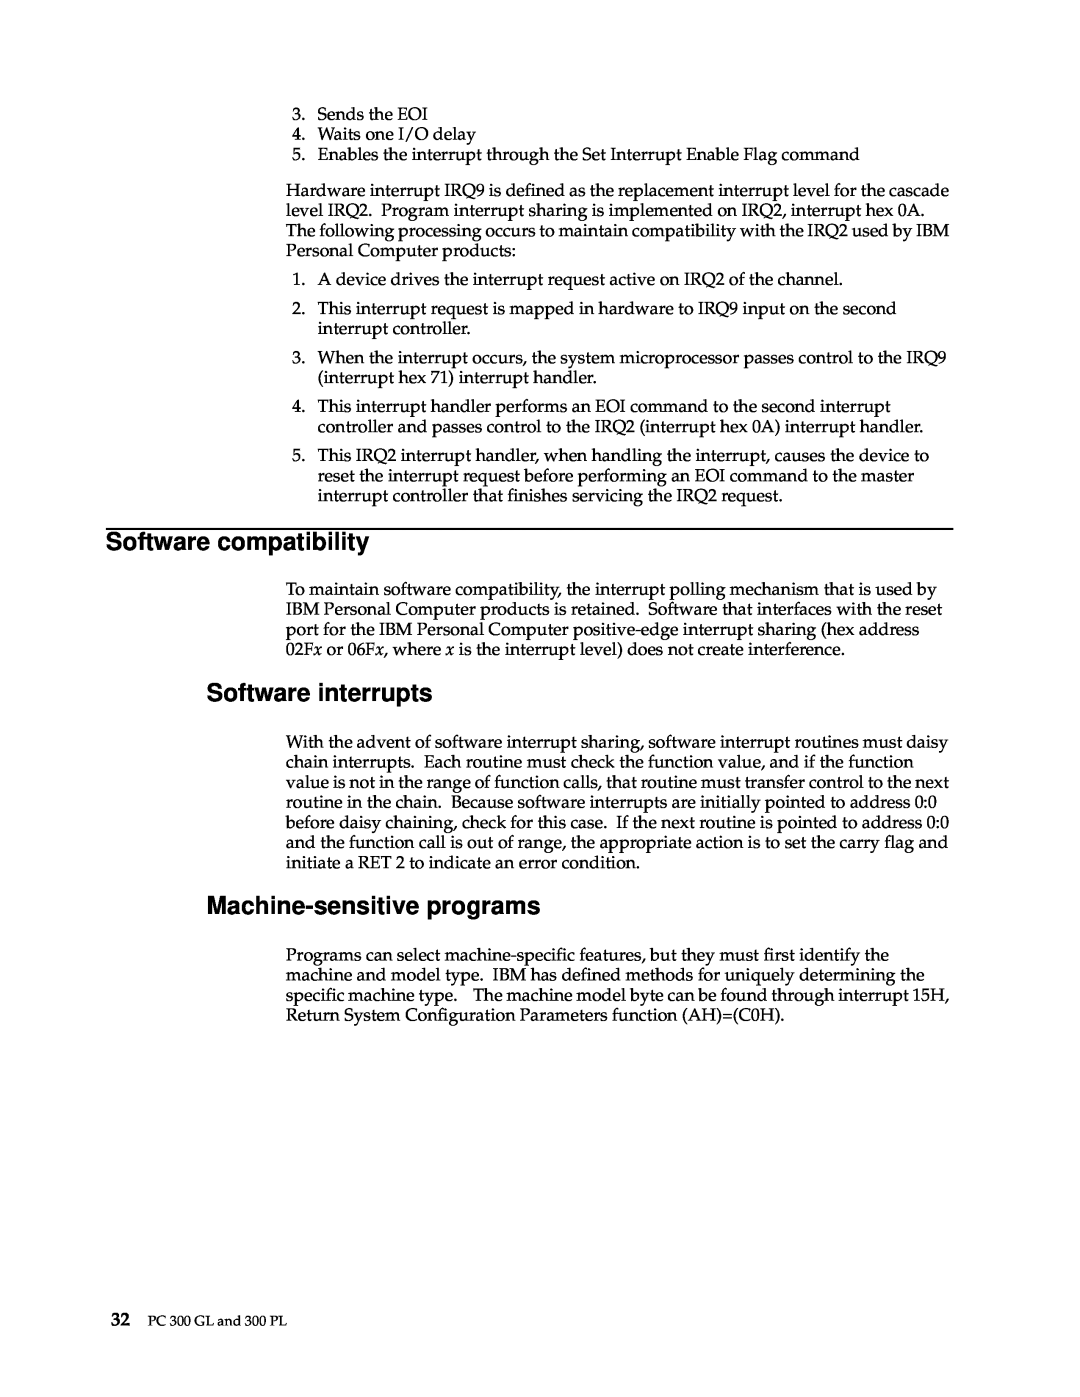 IBM PC 300GL manual Software compatibility, Software interrupts, Machine-sensitive programs 